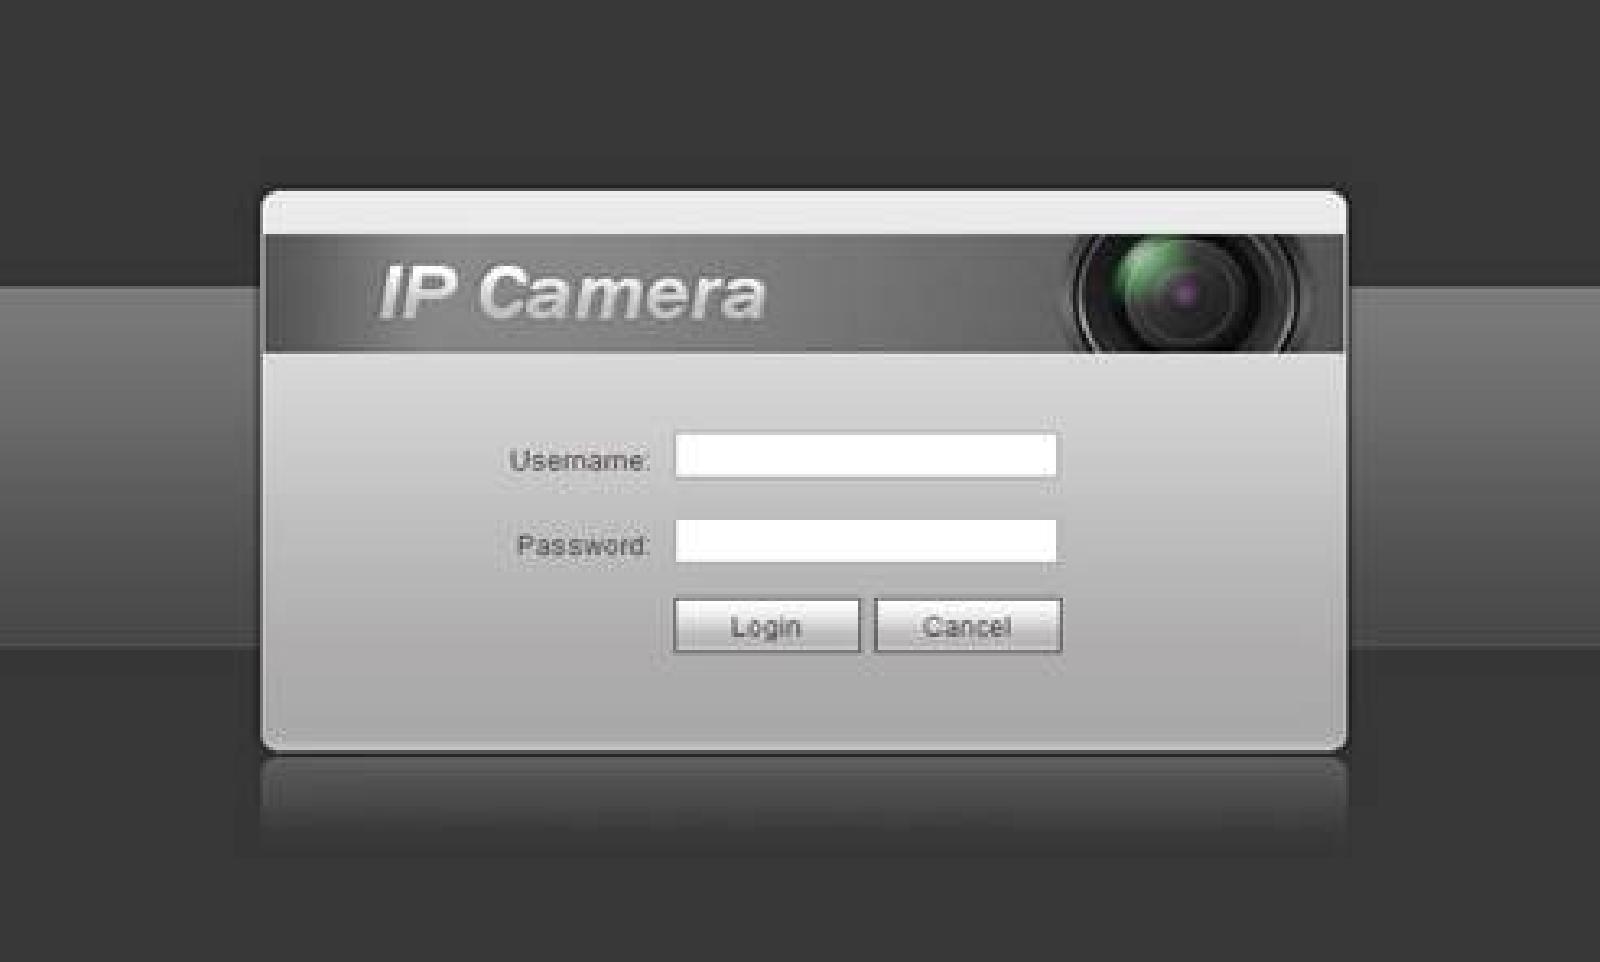 Ip mp4. Dahua web Интерфейс. Login камера. Пароль для камер. Веб Интерфейс камер Дахуа.